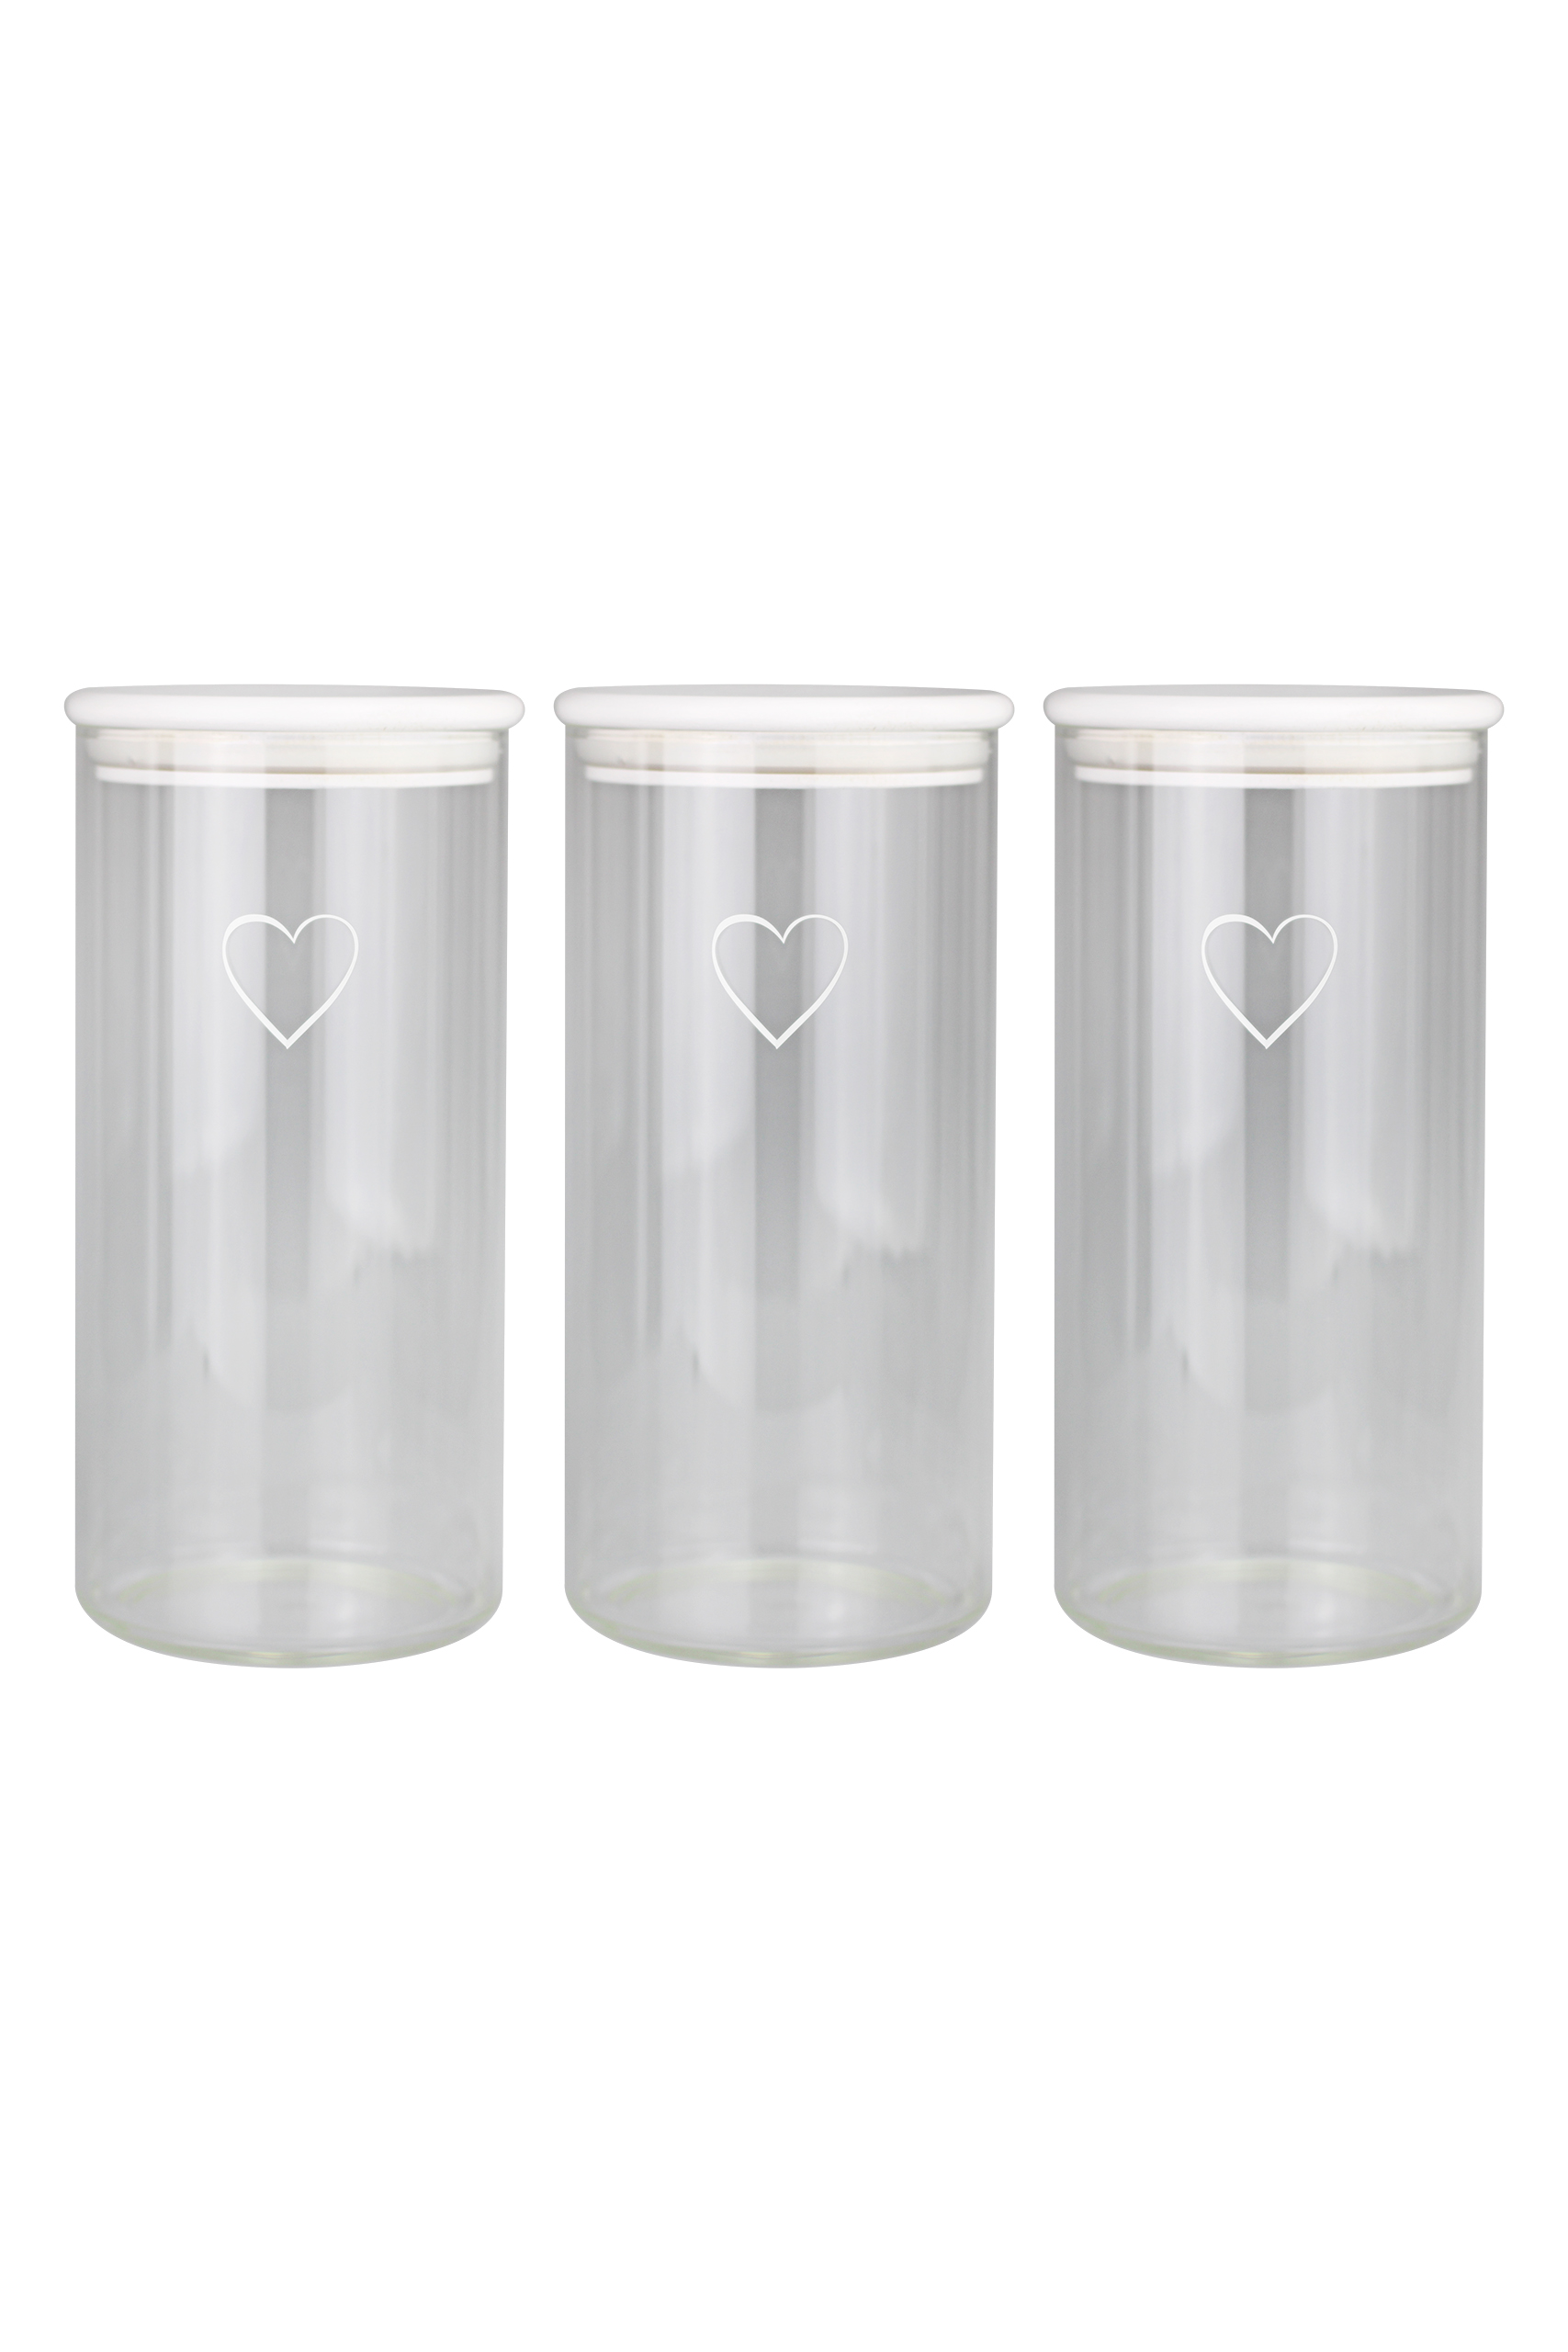 Set 3 Glass White Heart Bamboo Storage Jars - White Lid 1400ml | Pretty Little Home